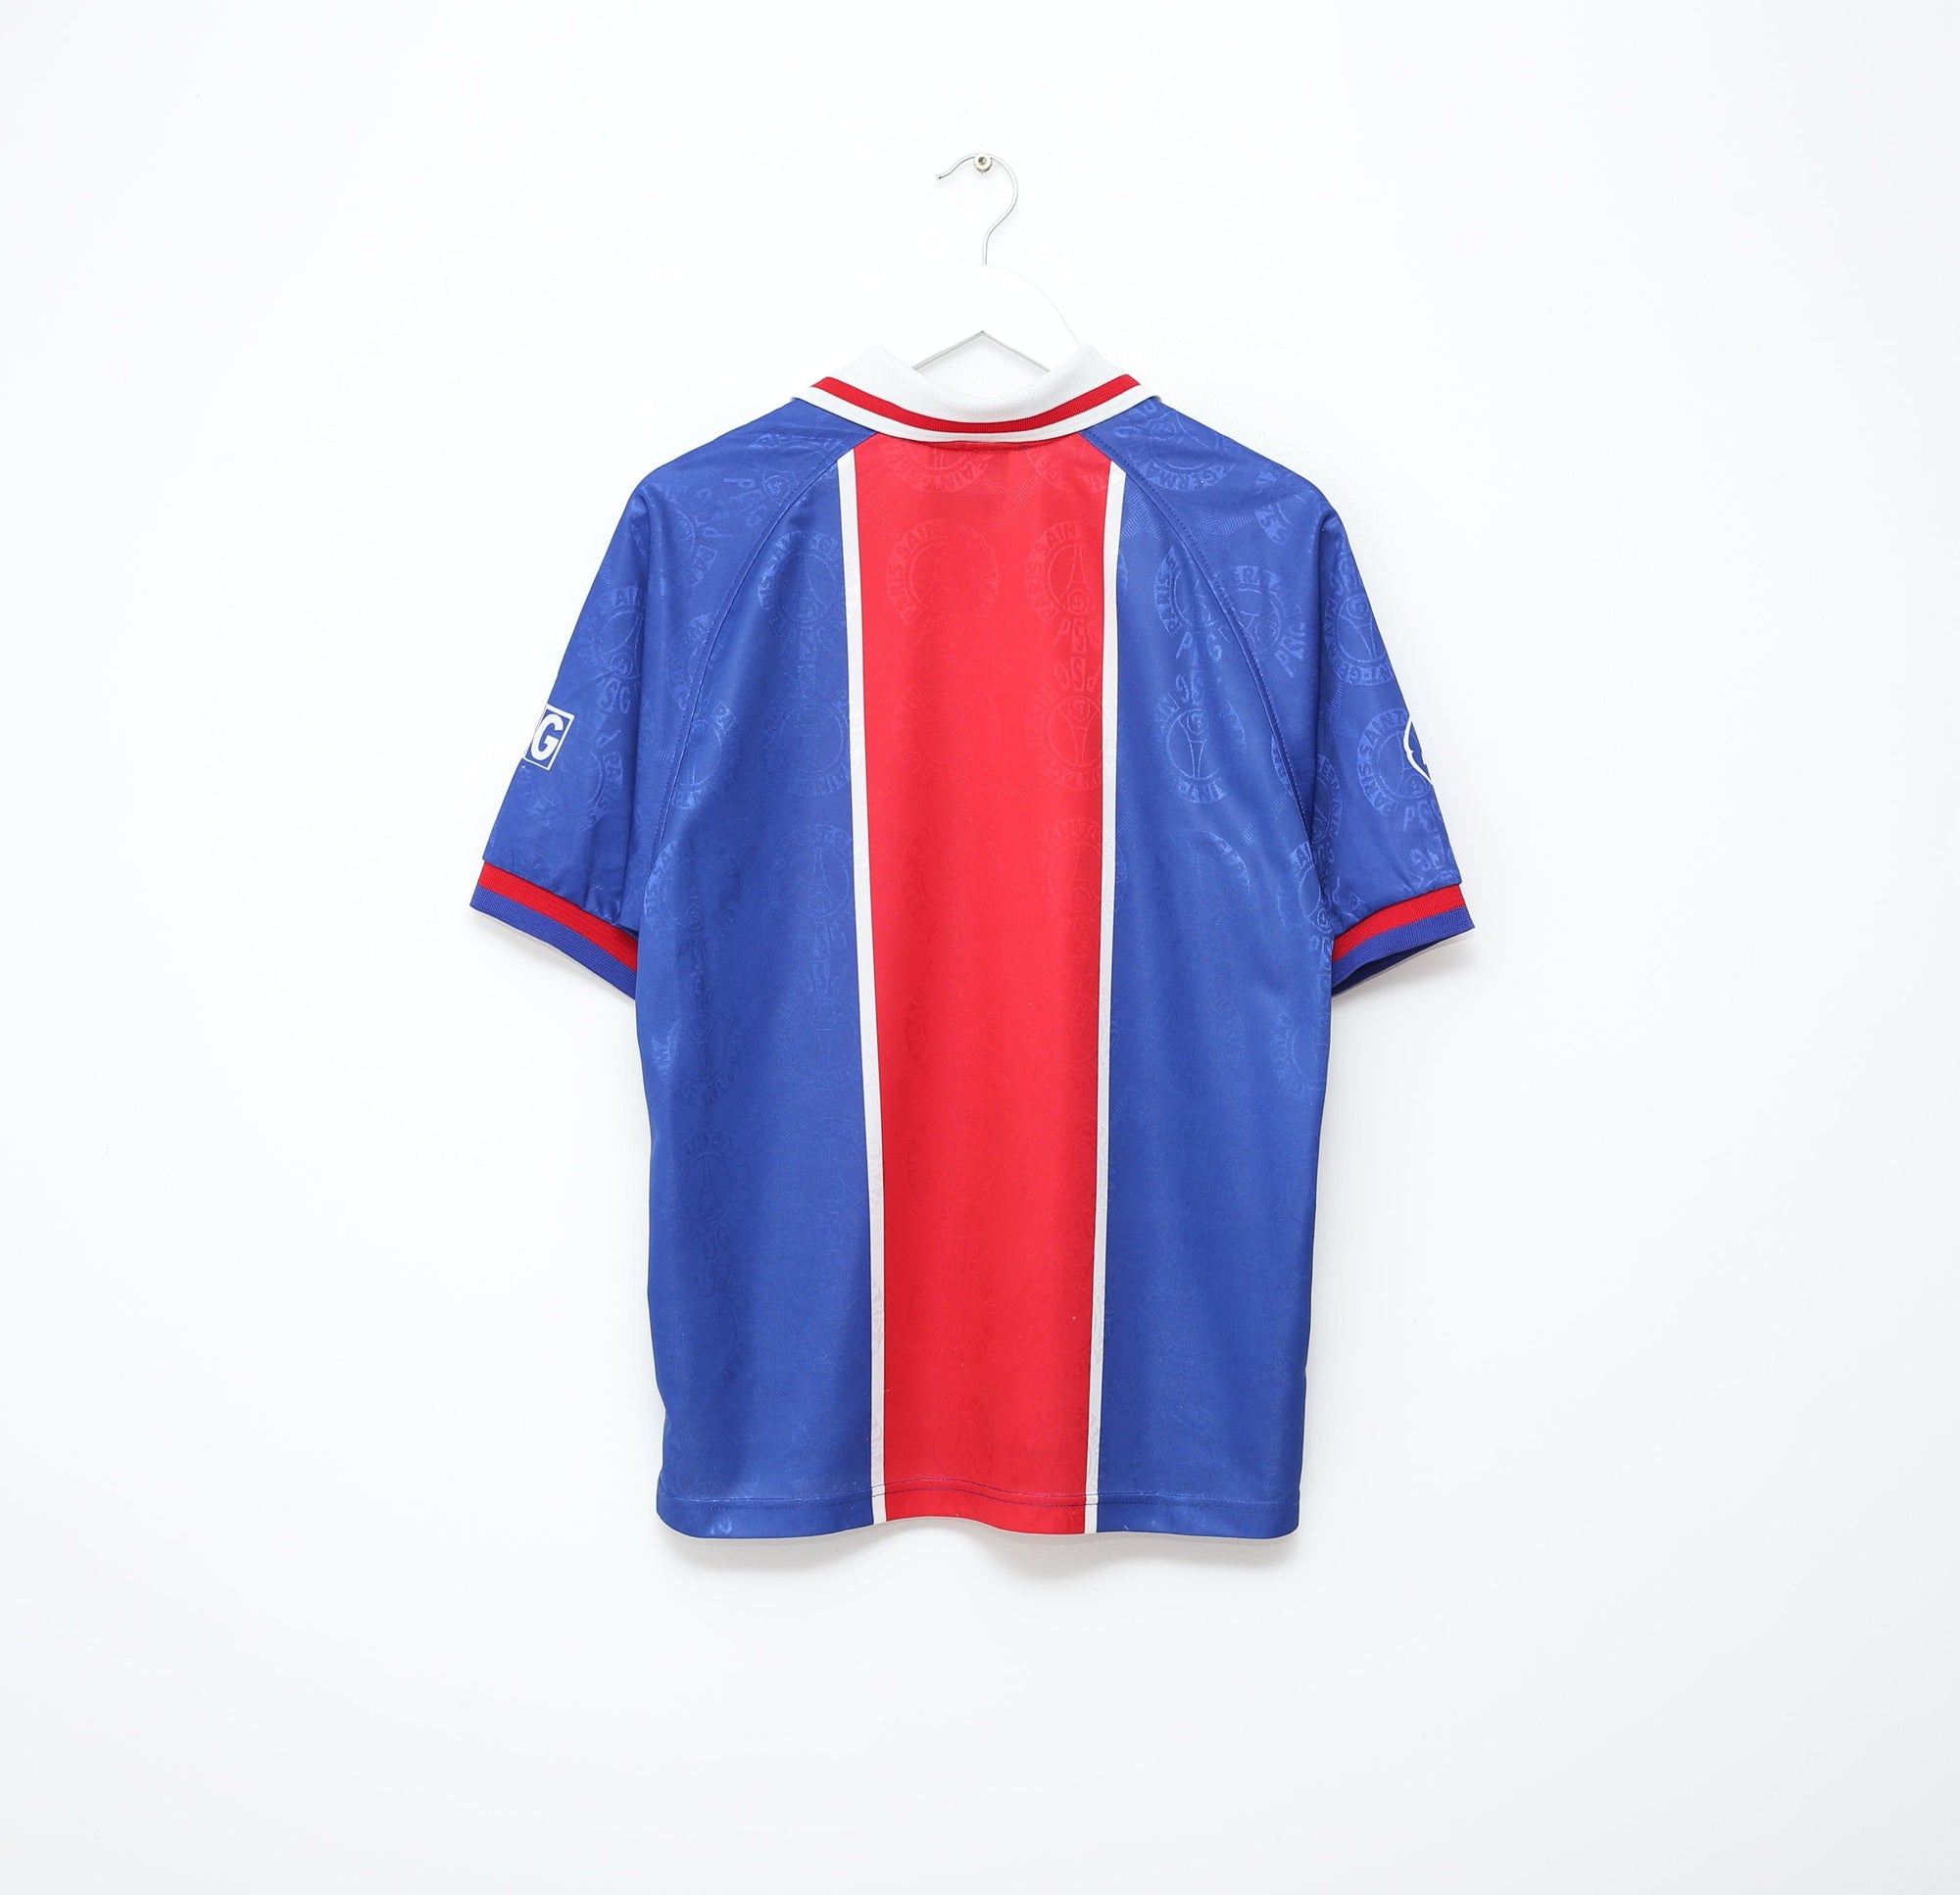 1996/97 PSG Vintage Nike Home Football Shirt Jersey (M) Paris Saint-Germain